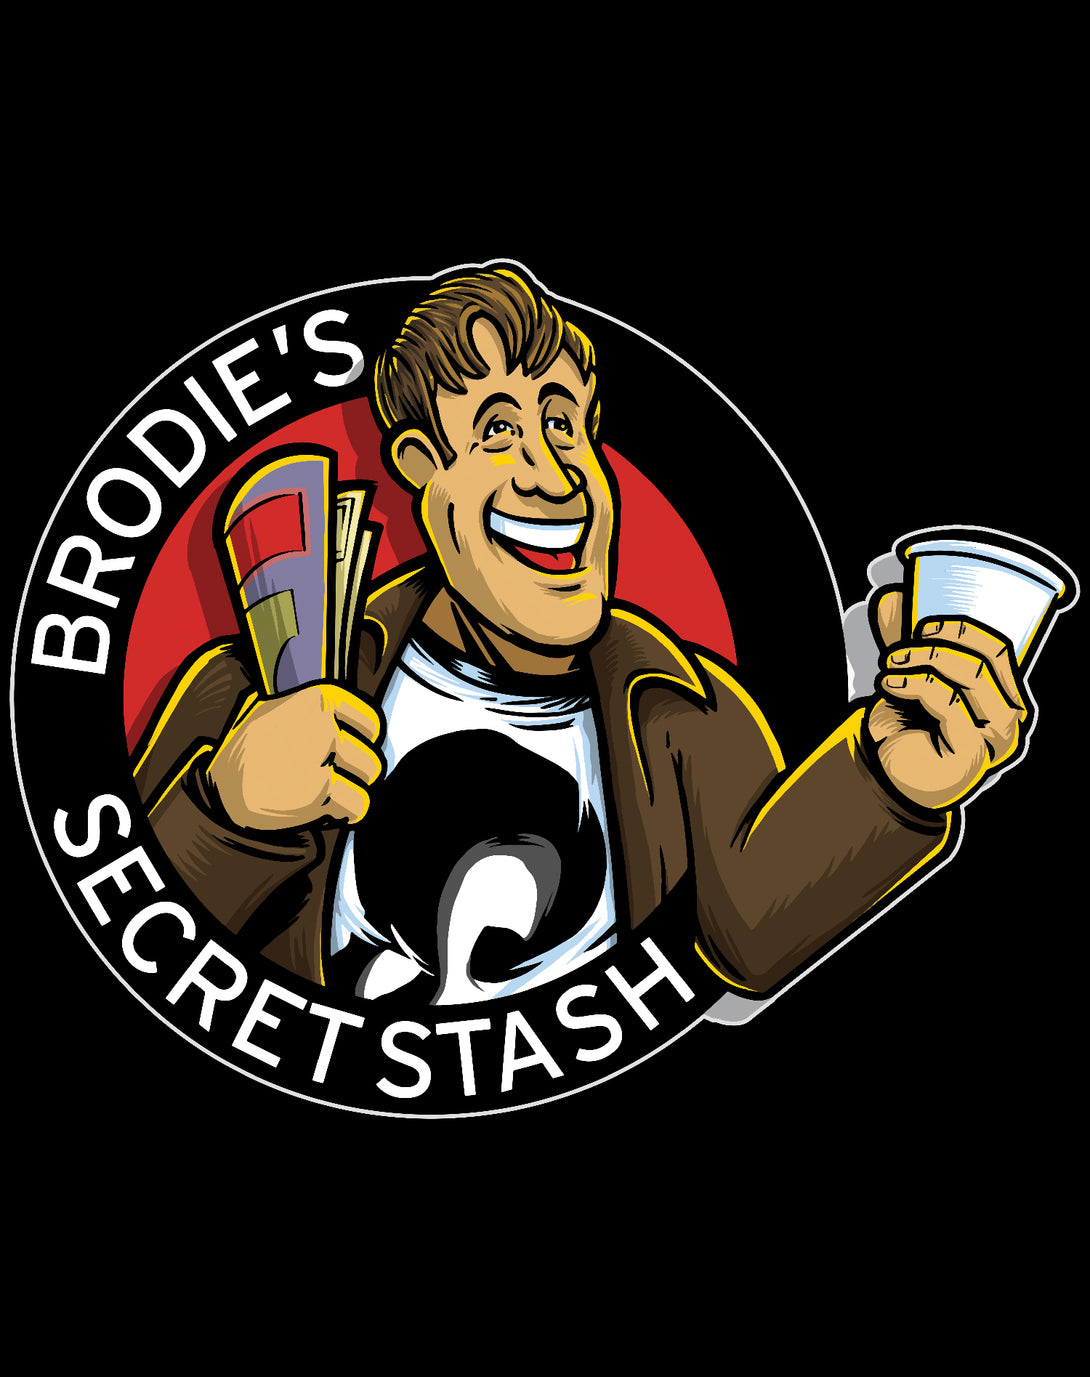 Kevin Smith Jay & Silent Bob Reboot Brodie's Secret Stash Comic Book Store Logo Official Men's T-Shirt Black - Urban Species Design Close Up